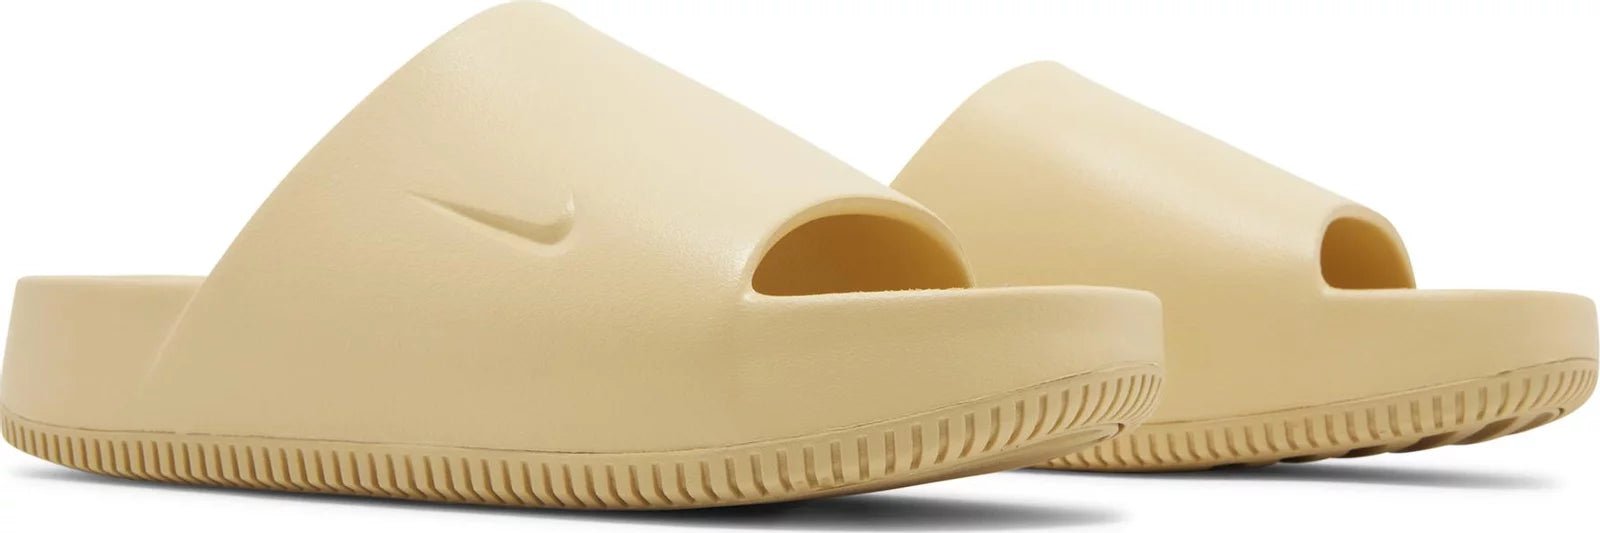 Nike Calm Slide Sesame - Paroissesaintefoy Sneakers Sale Online